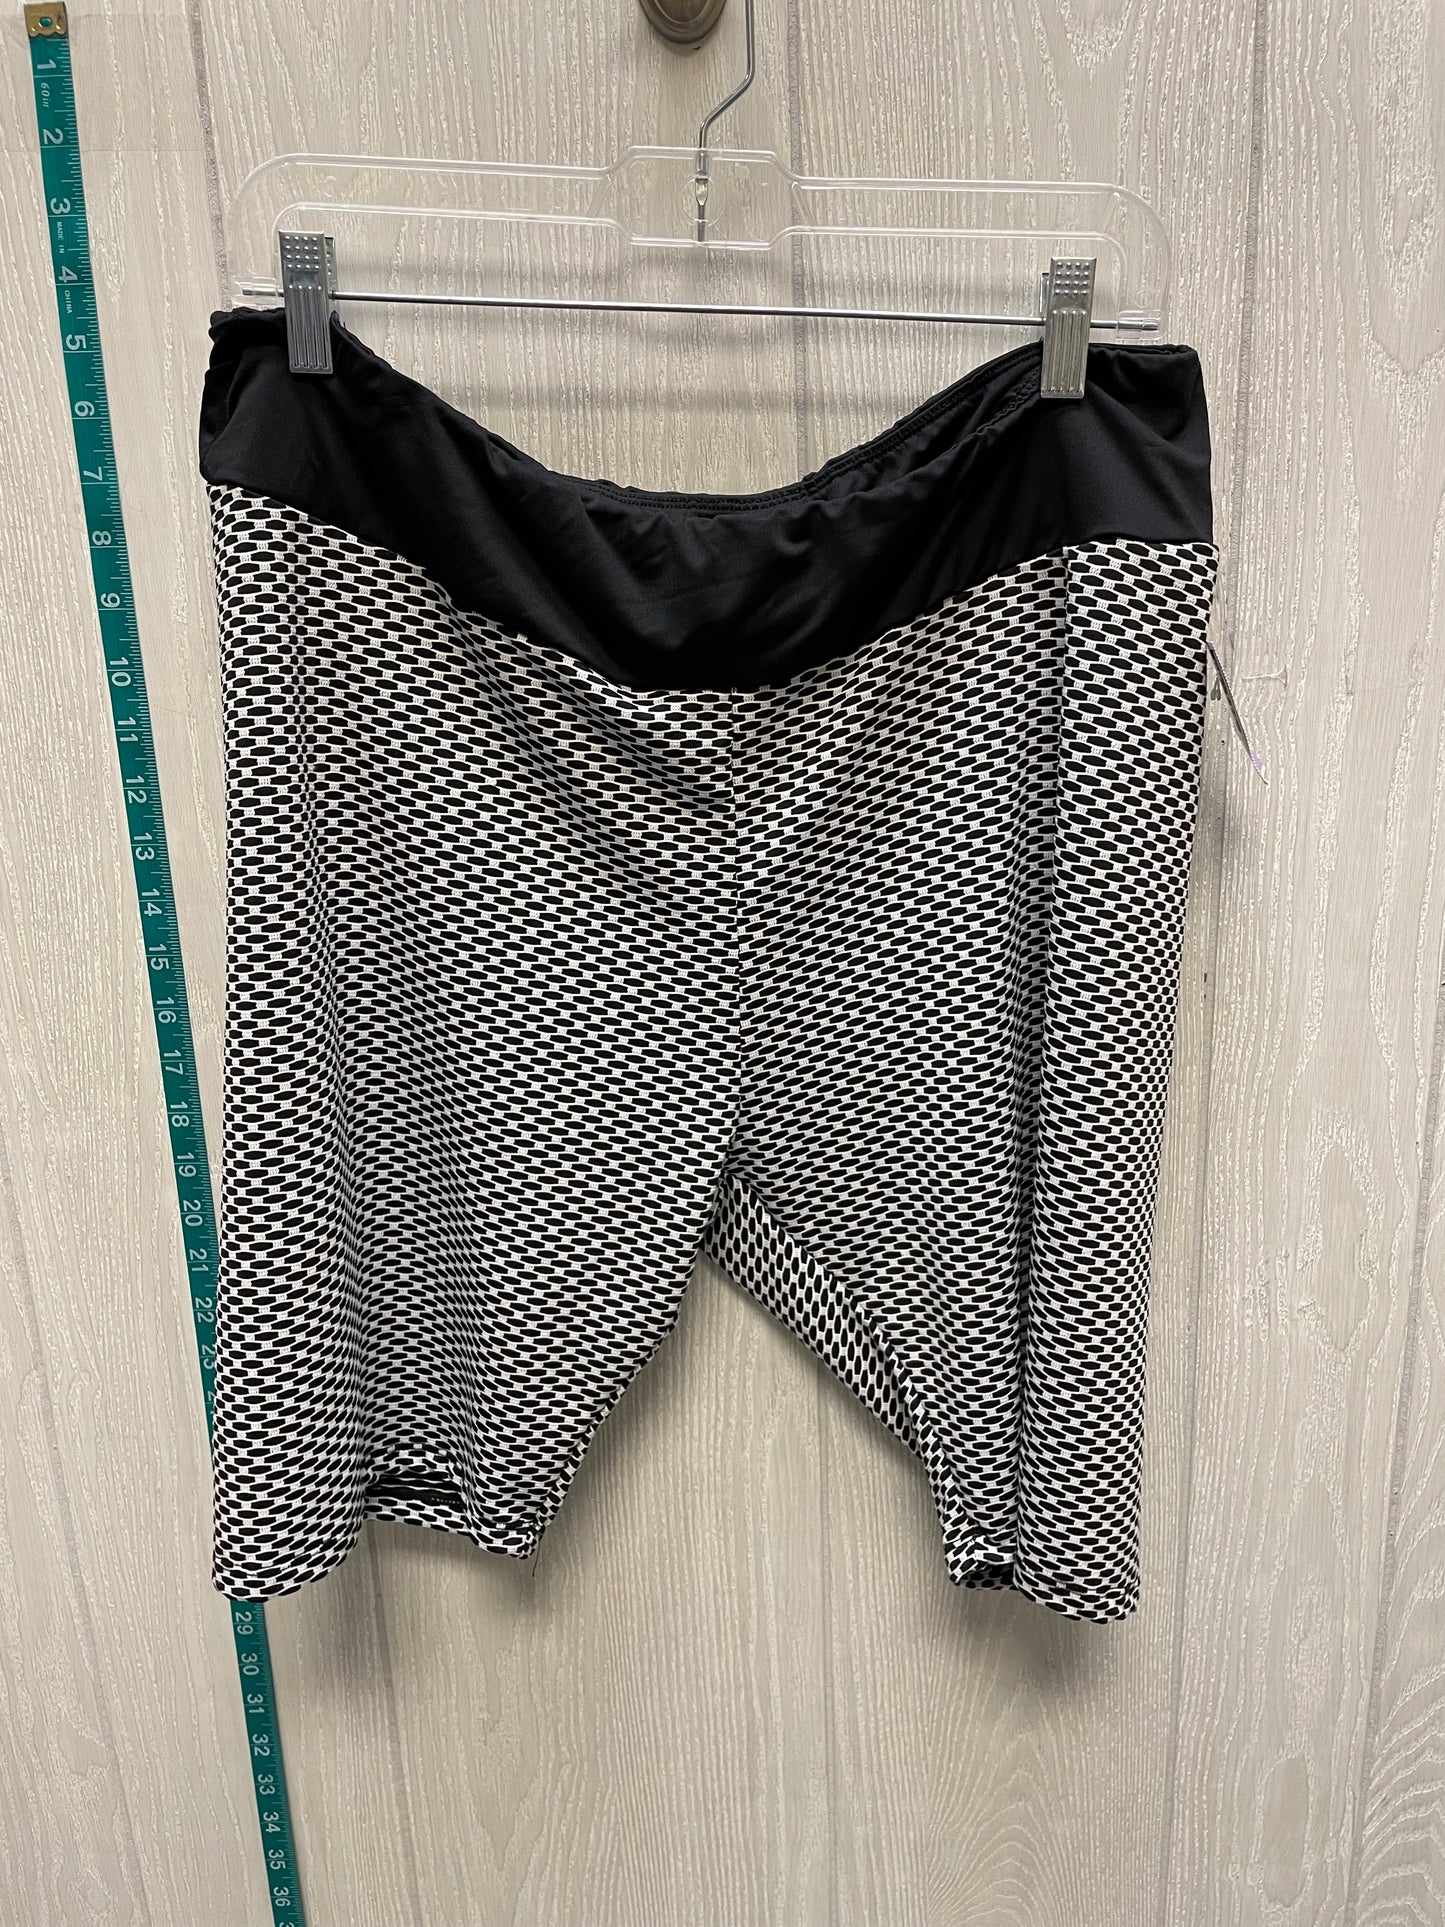 Black & White Shorts Clothes Mentor, Size 1x